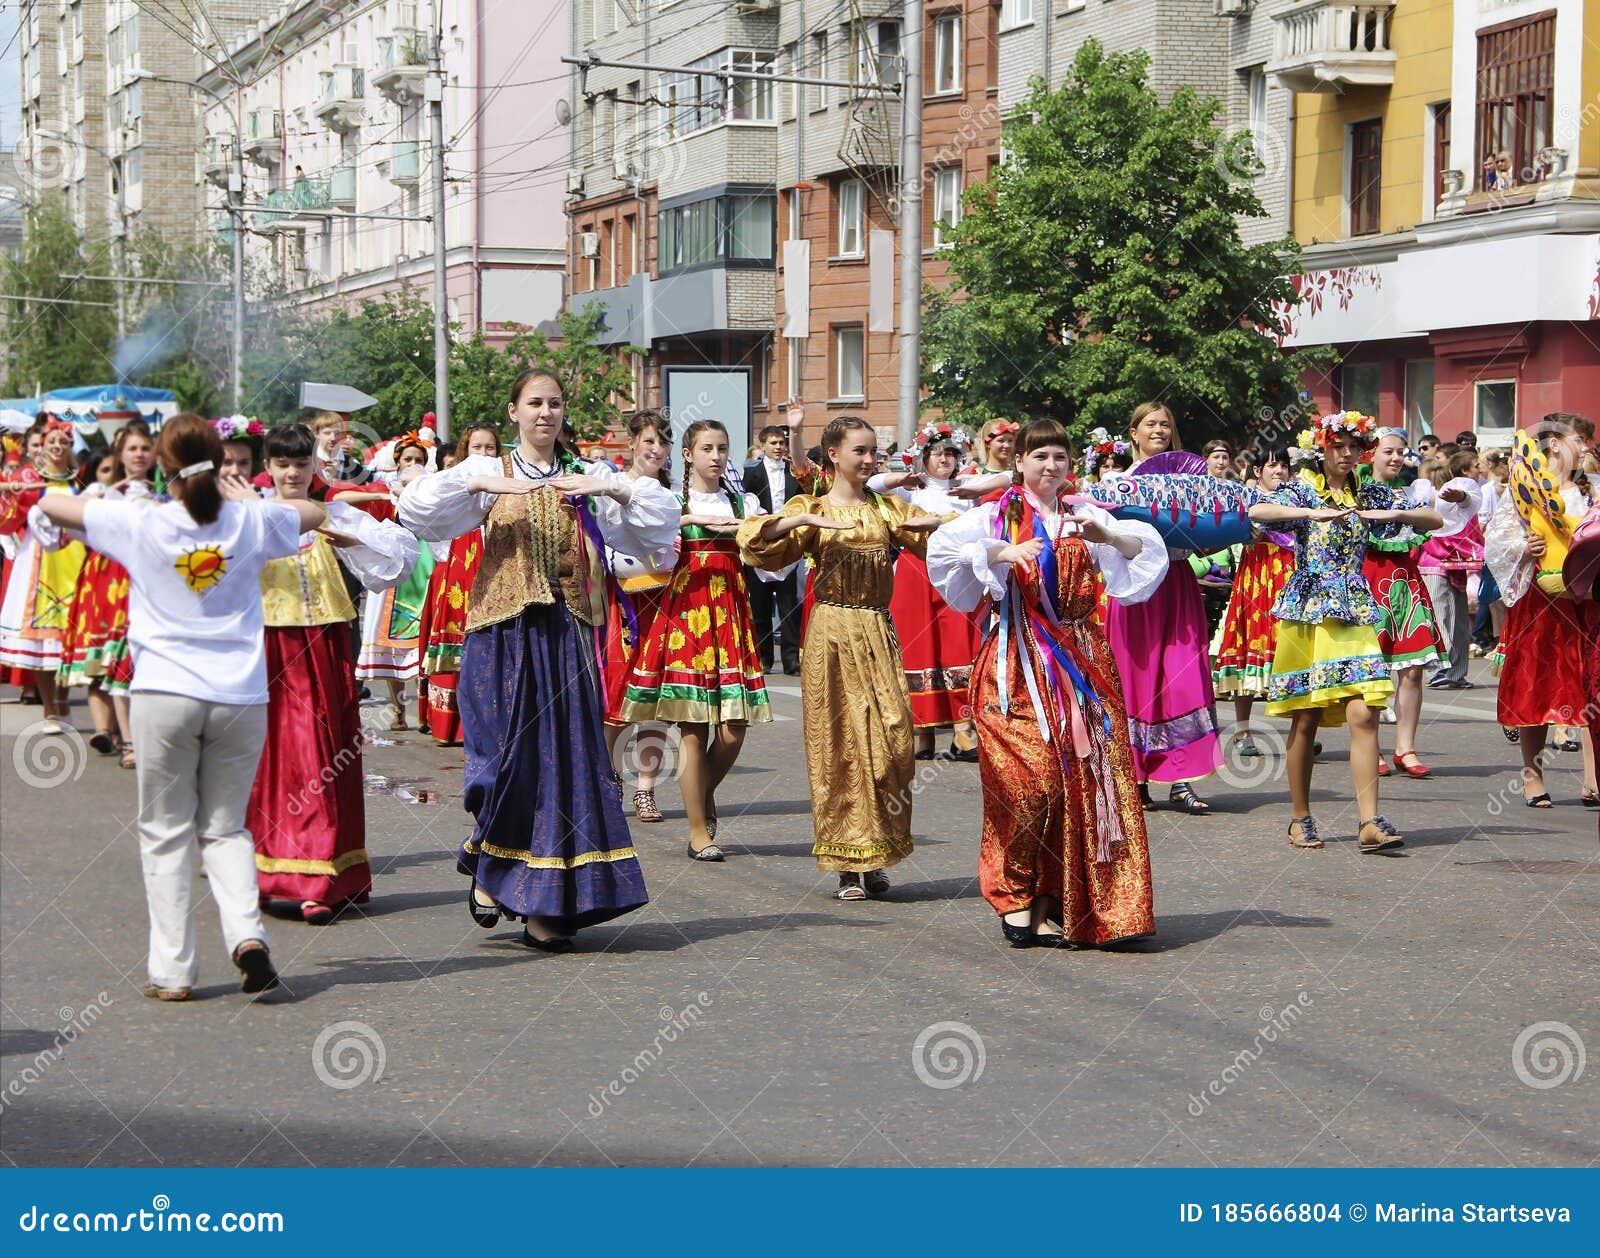 Krasnoyarsk, Russia. June 20, 2014. People in Carnival Costumes Do